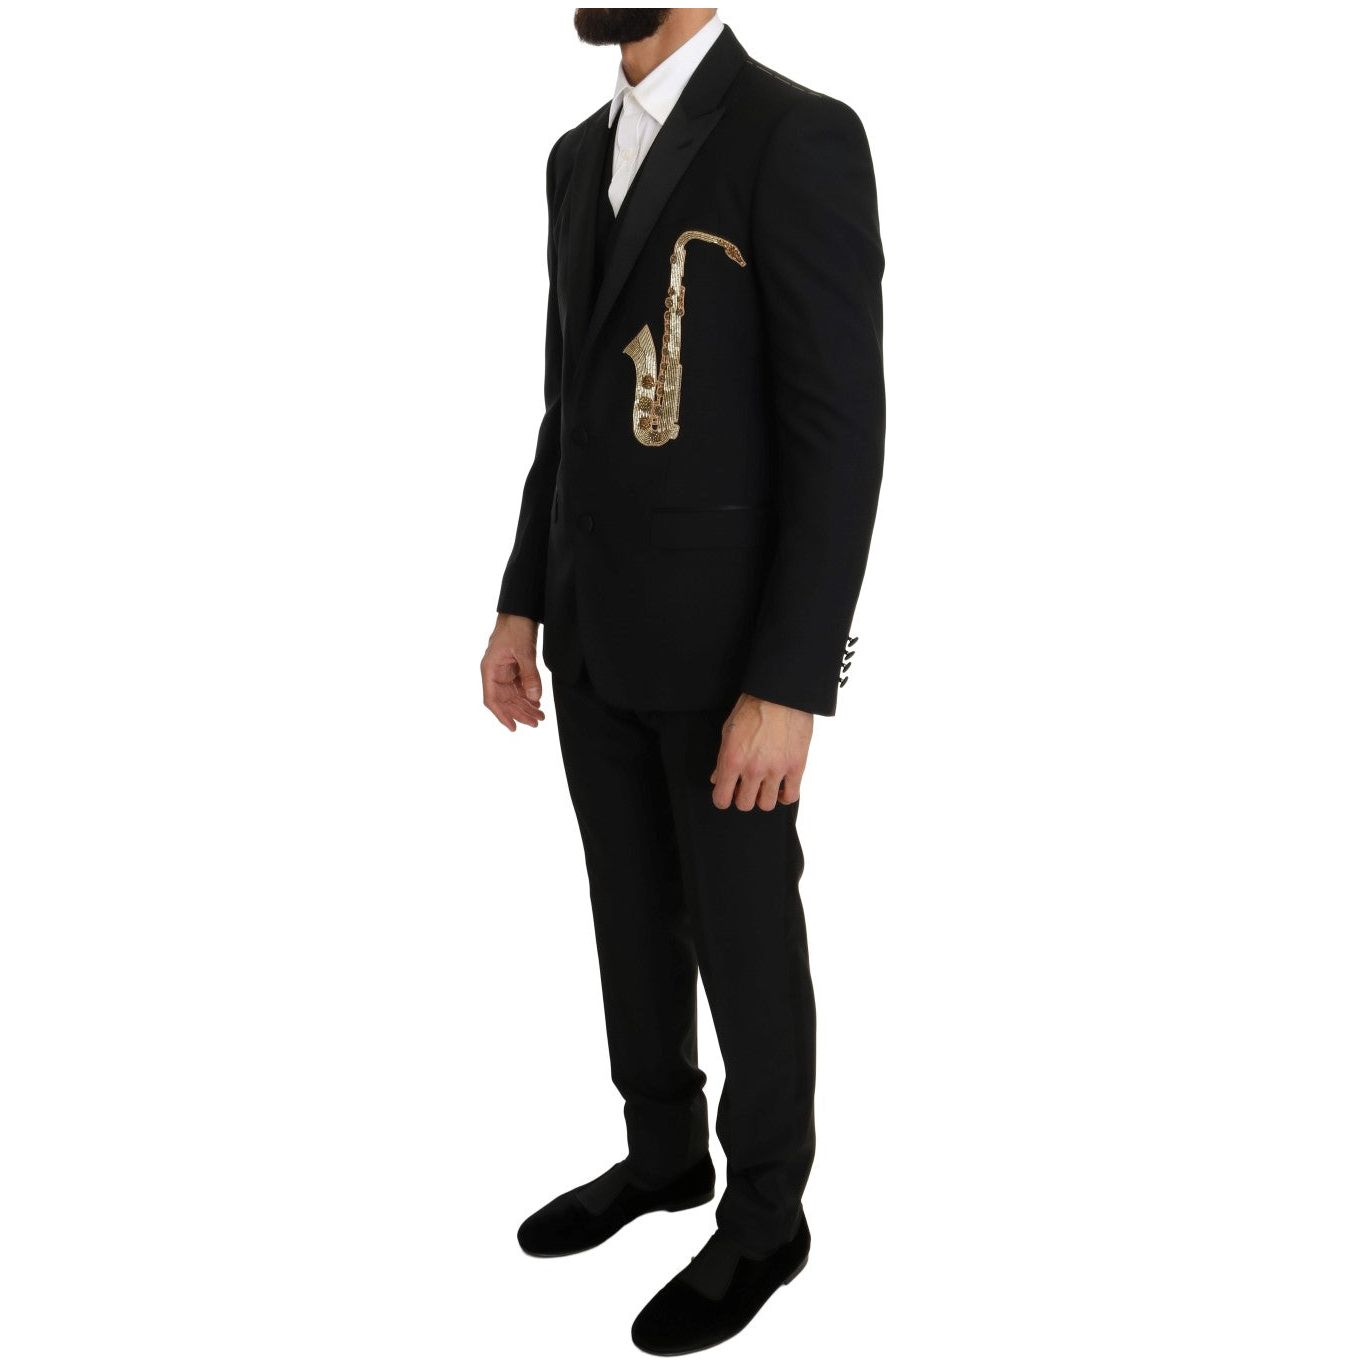 Dolce & Gabbana Elegant Black Three-Piece Suit with Saxophone Embroidery black-wool-silk-saxophone-slim-fit-suit Suit 464821-black-wool-silk-saxophone-slim-fit-suit-1.jpg